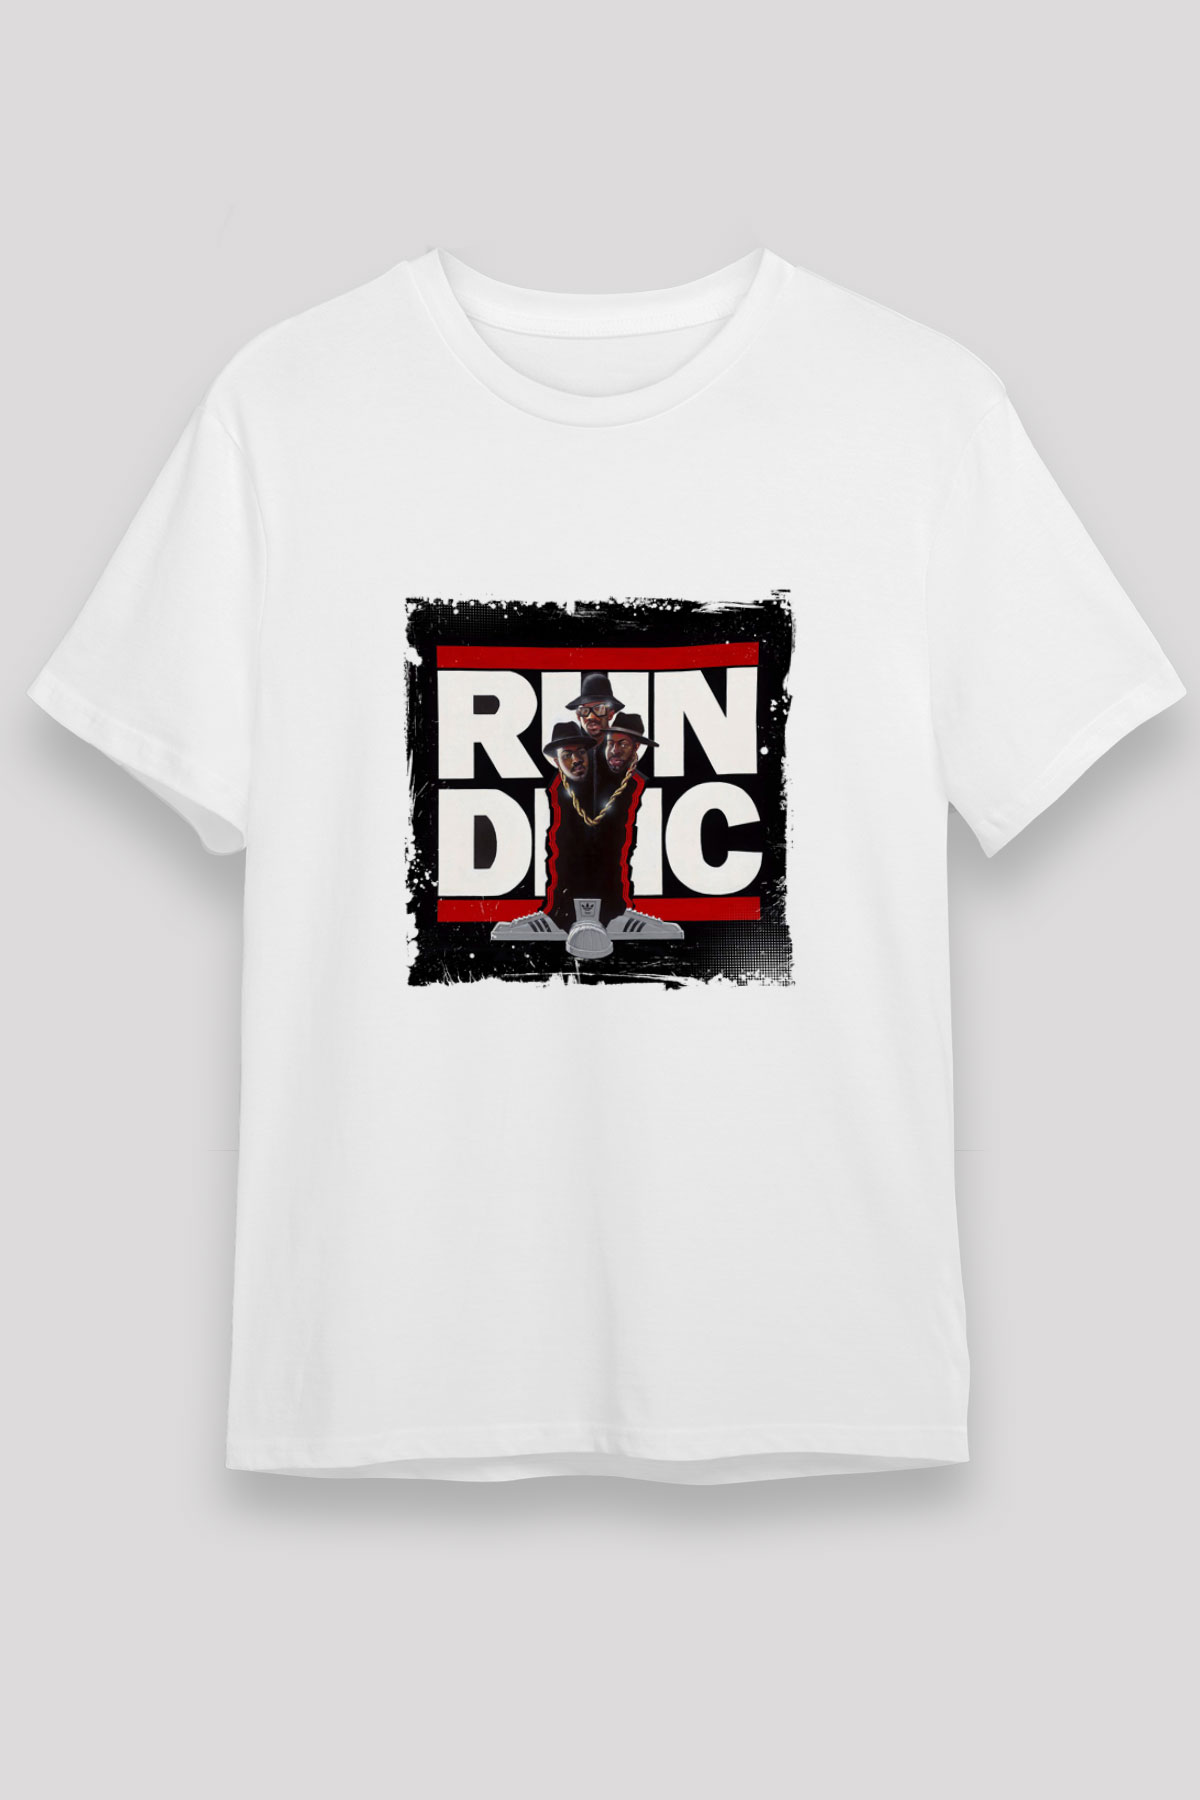 Run DMC T shirt,Hip Hop,Rap Tshirt 05